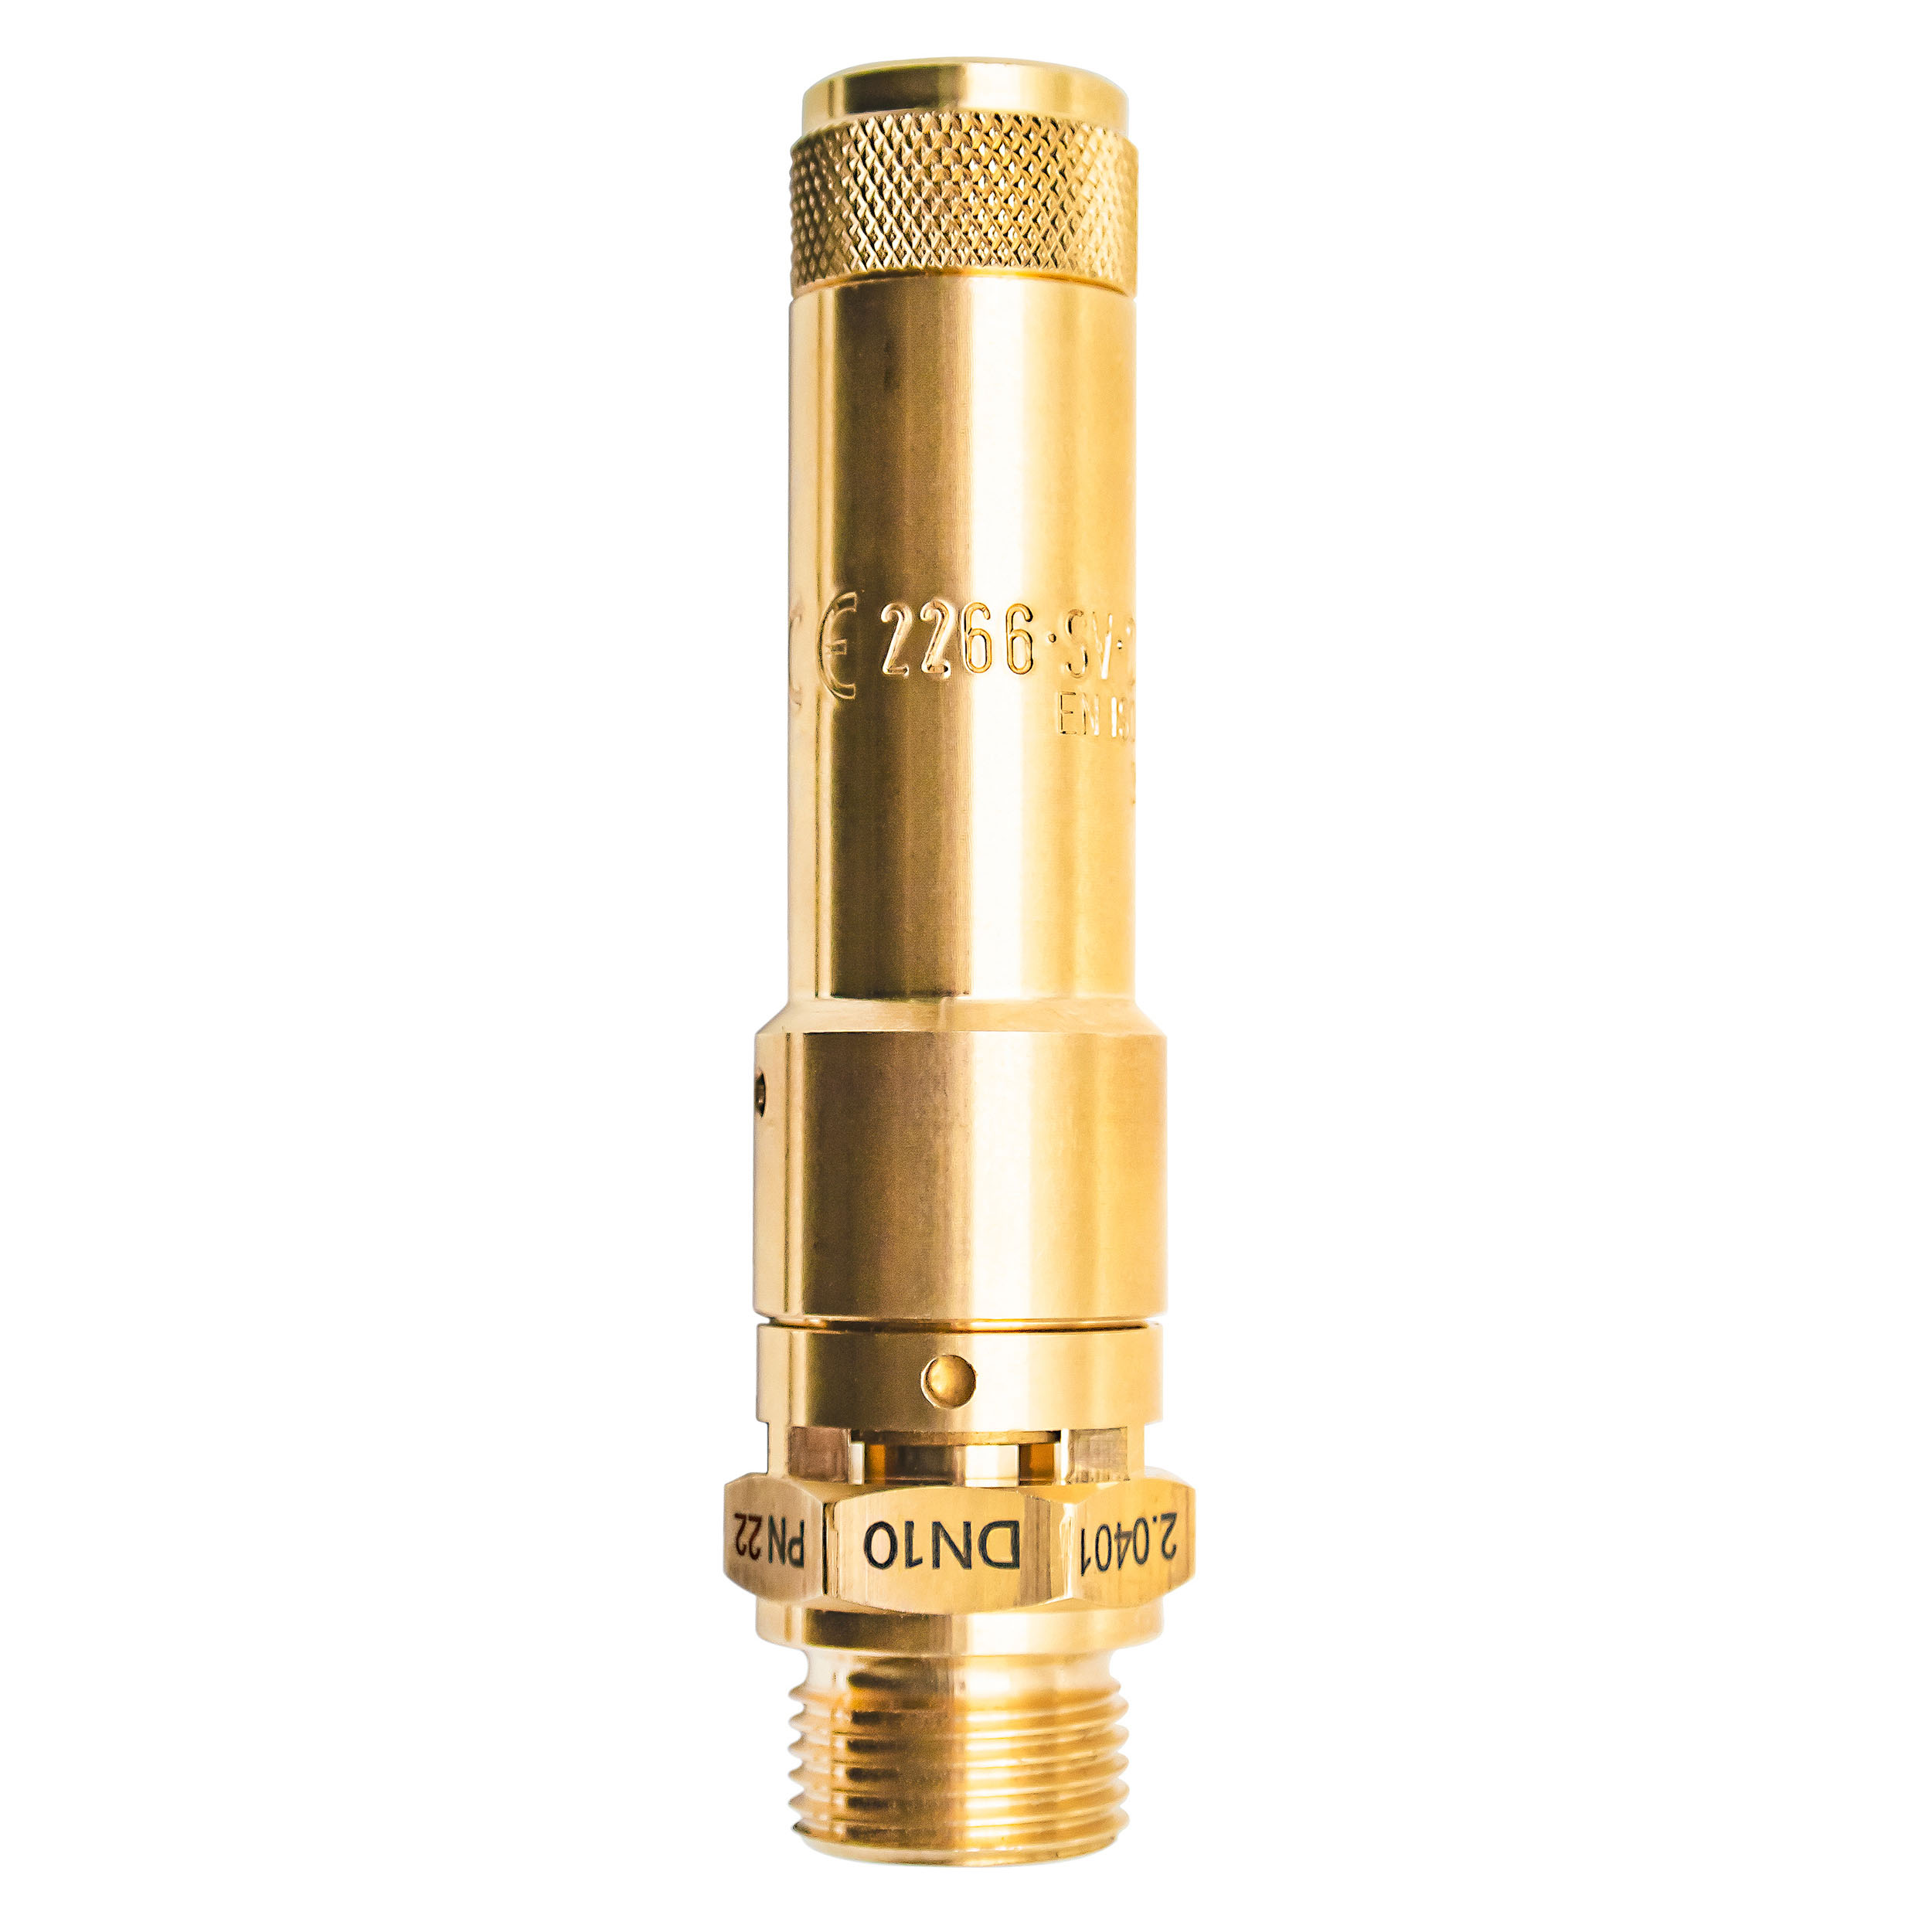 Savety valve component tested DN 10, G½, set pressure: 4.6 bar (66,7 psi)